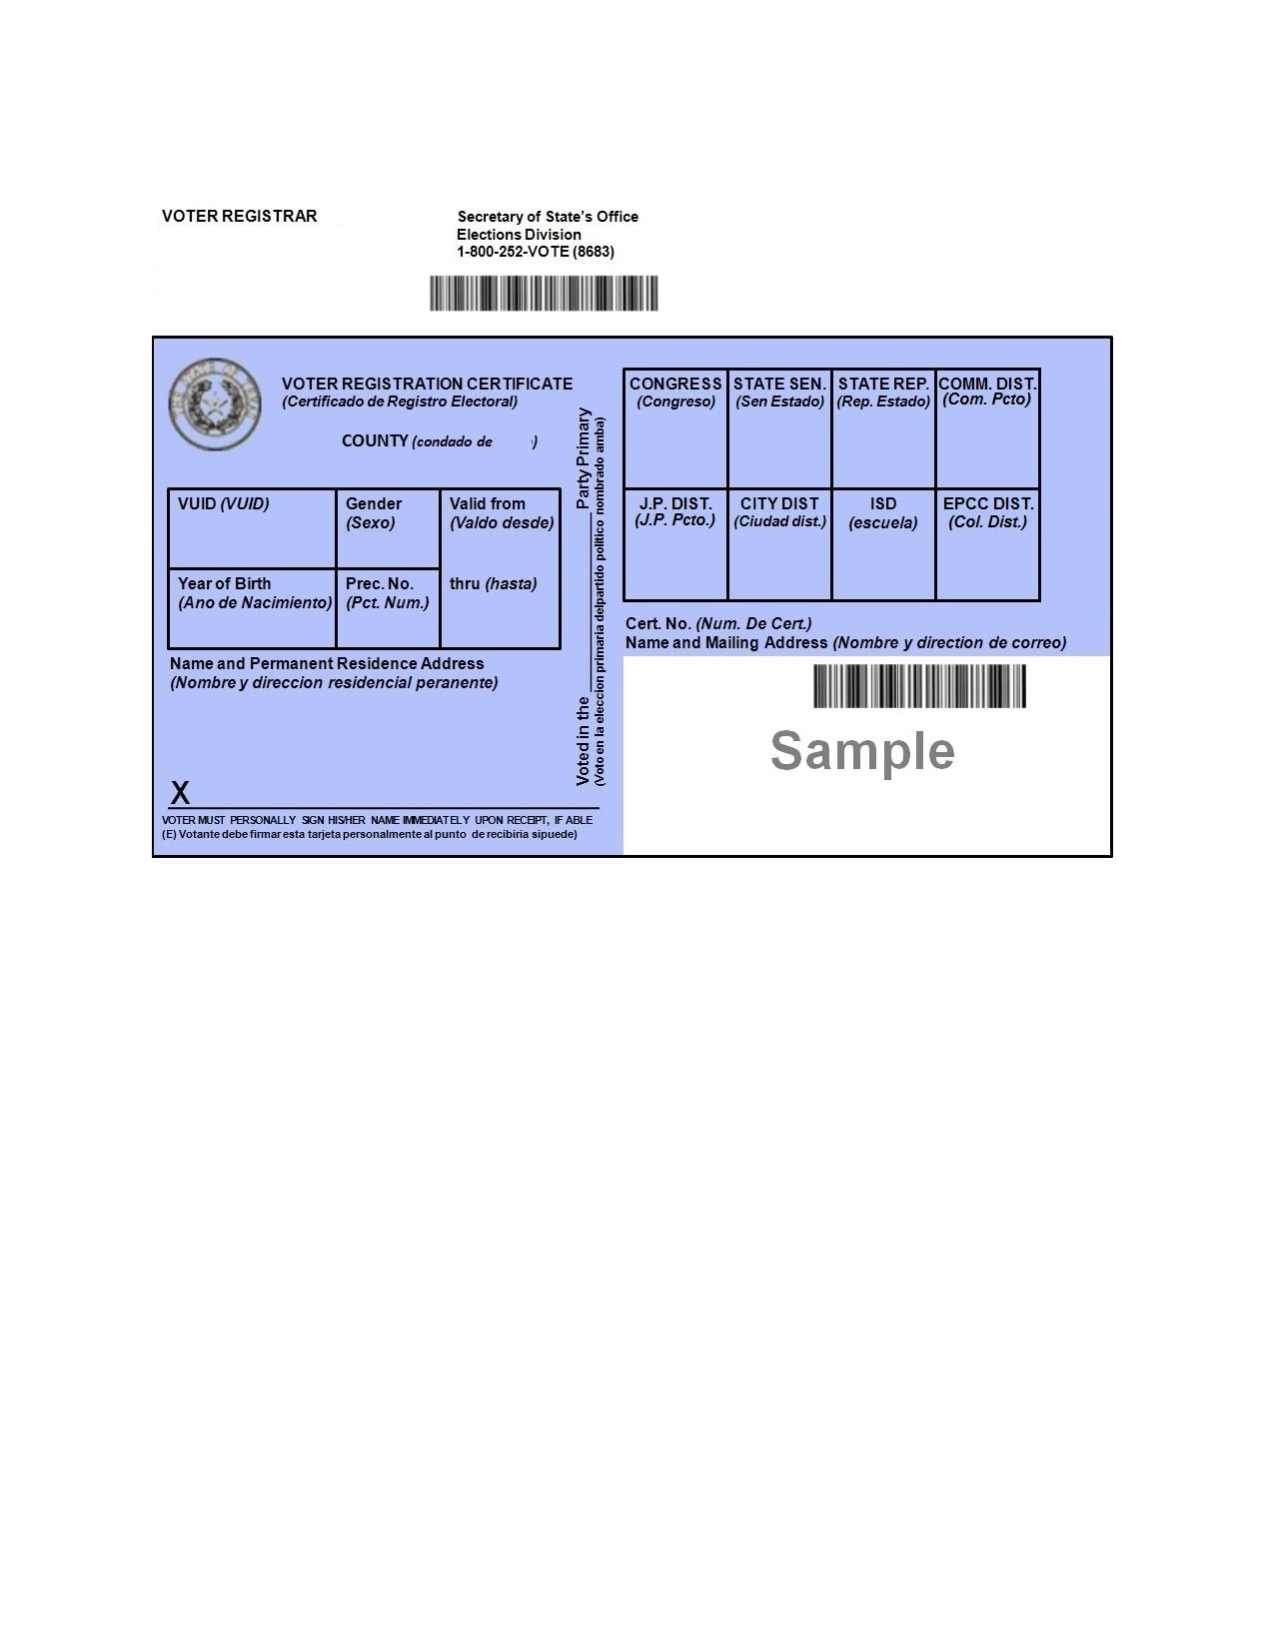 print voter id card